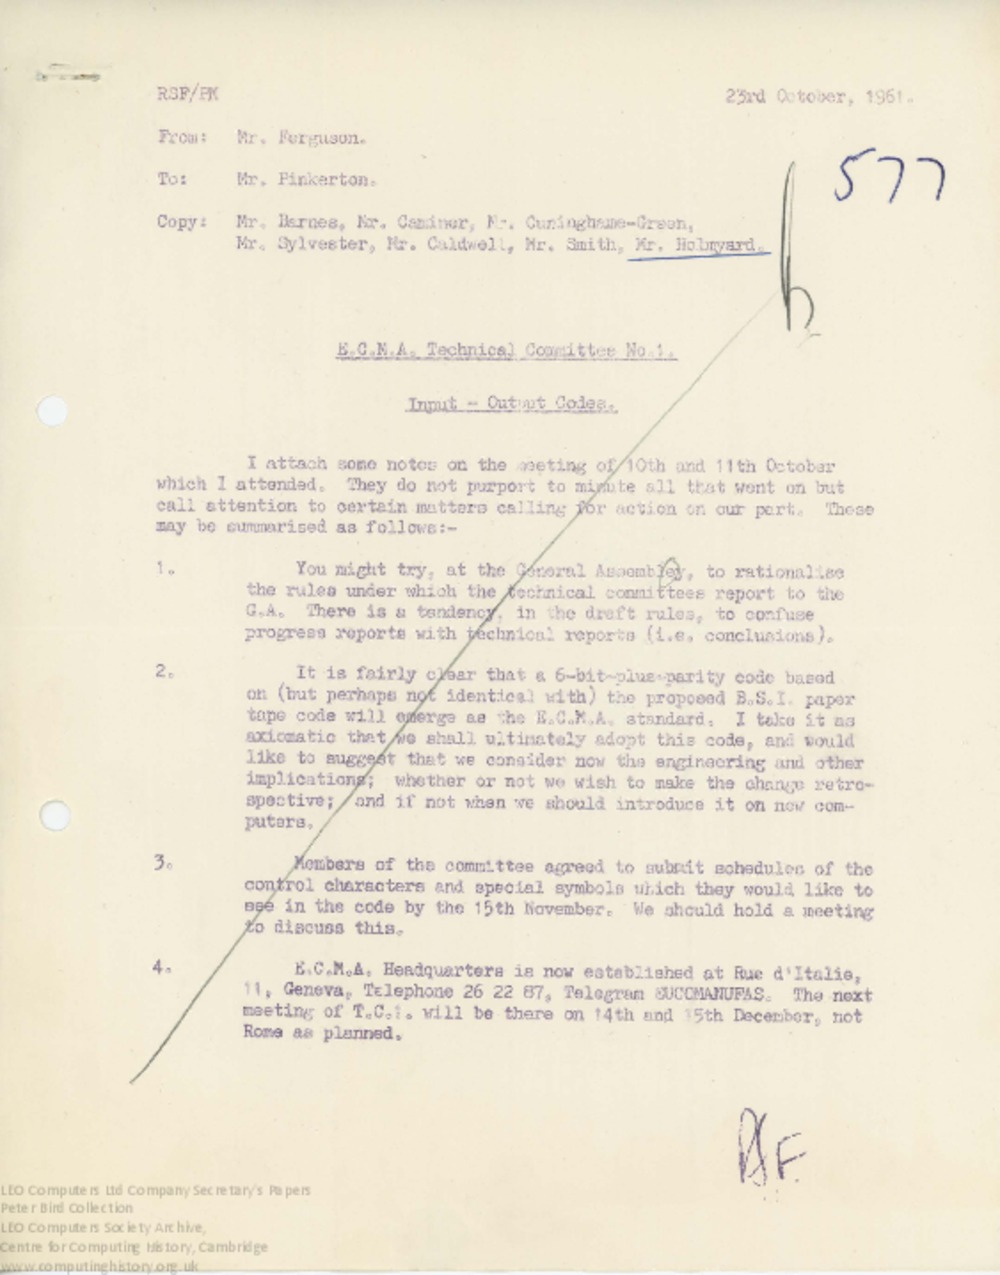 Article: 62851 ECMA Technical Committee Report, Oct 1961